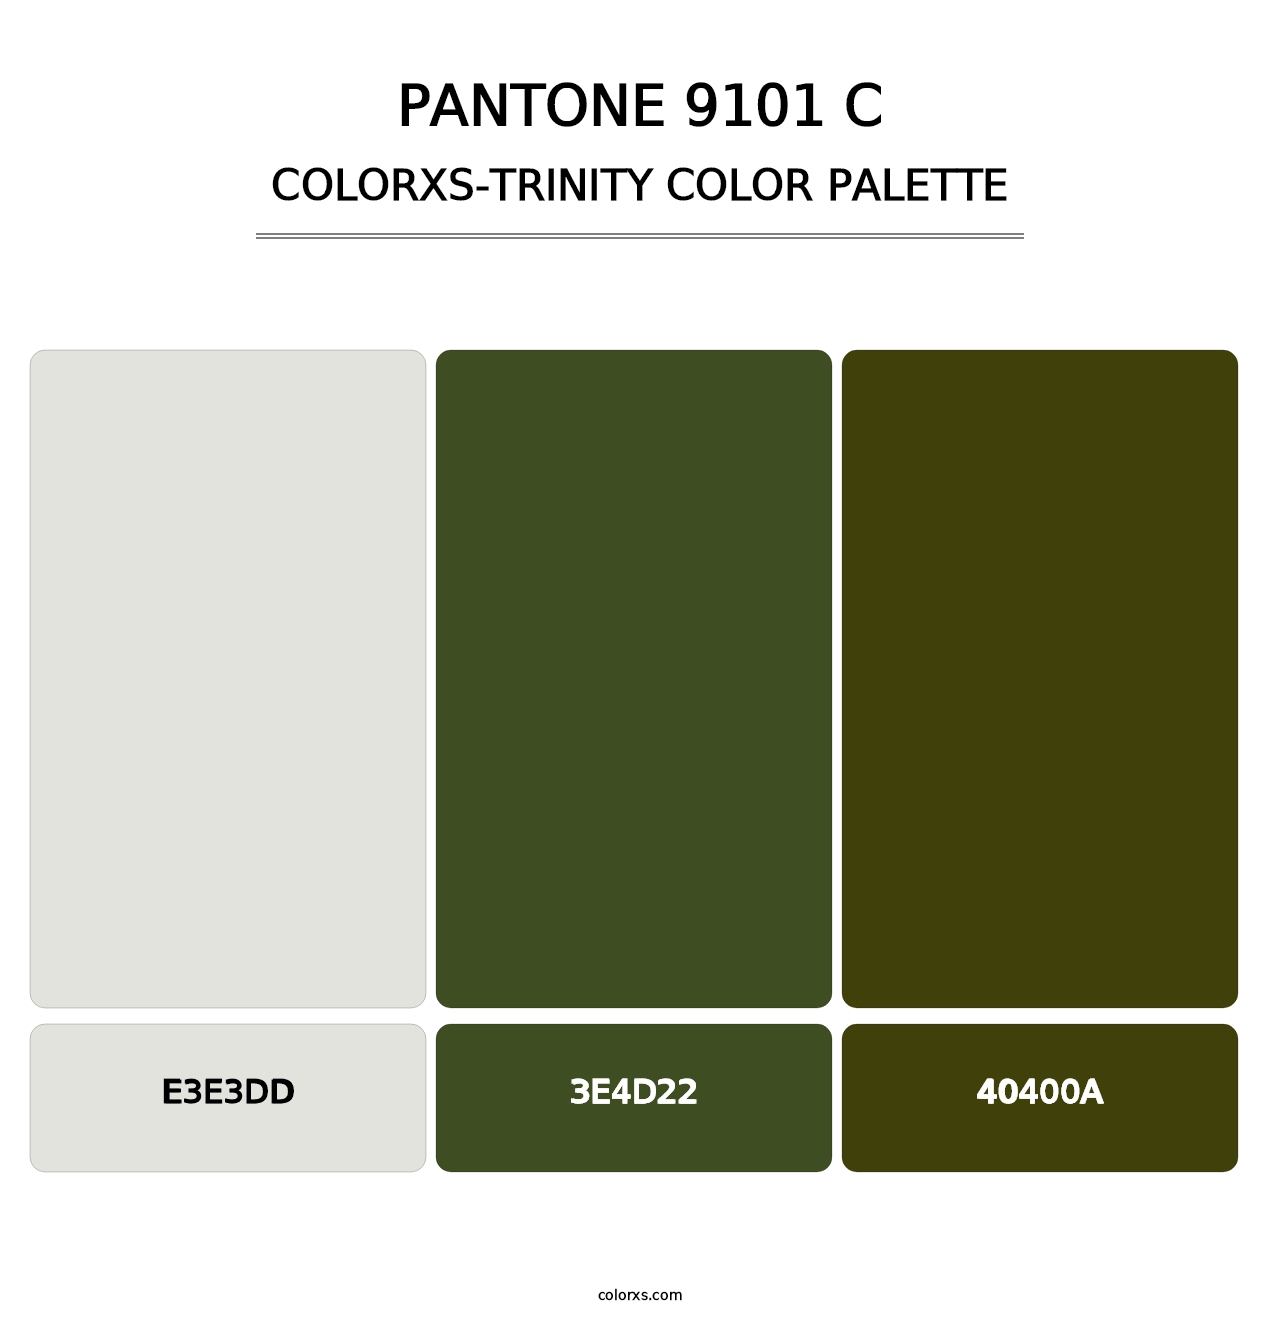 PANTONE 9101 C - Colorxs Trinity Palette